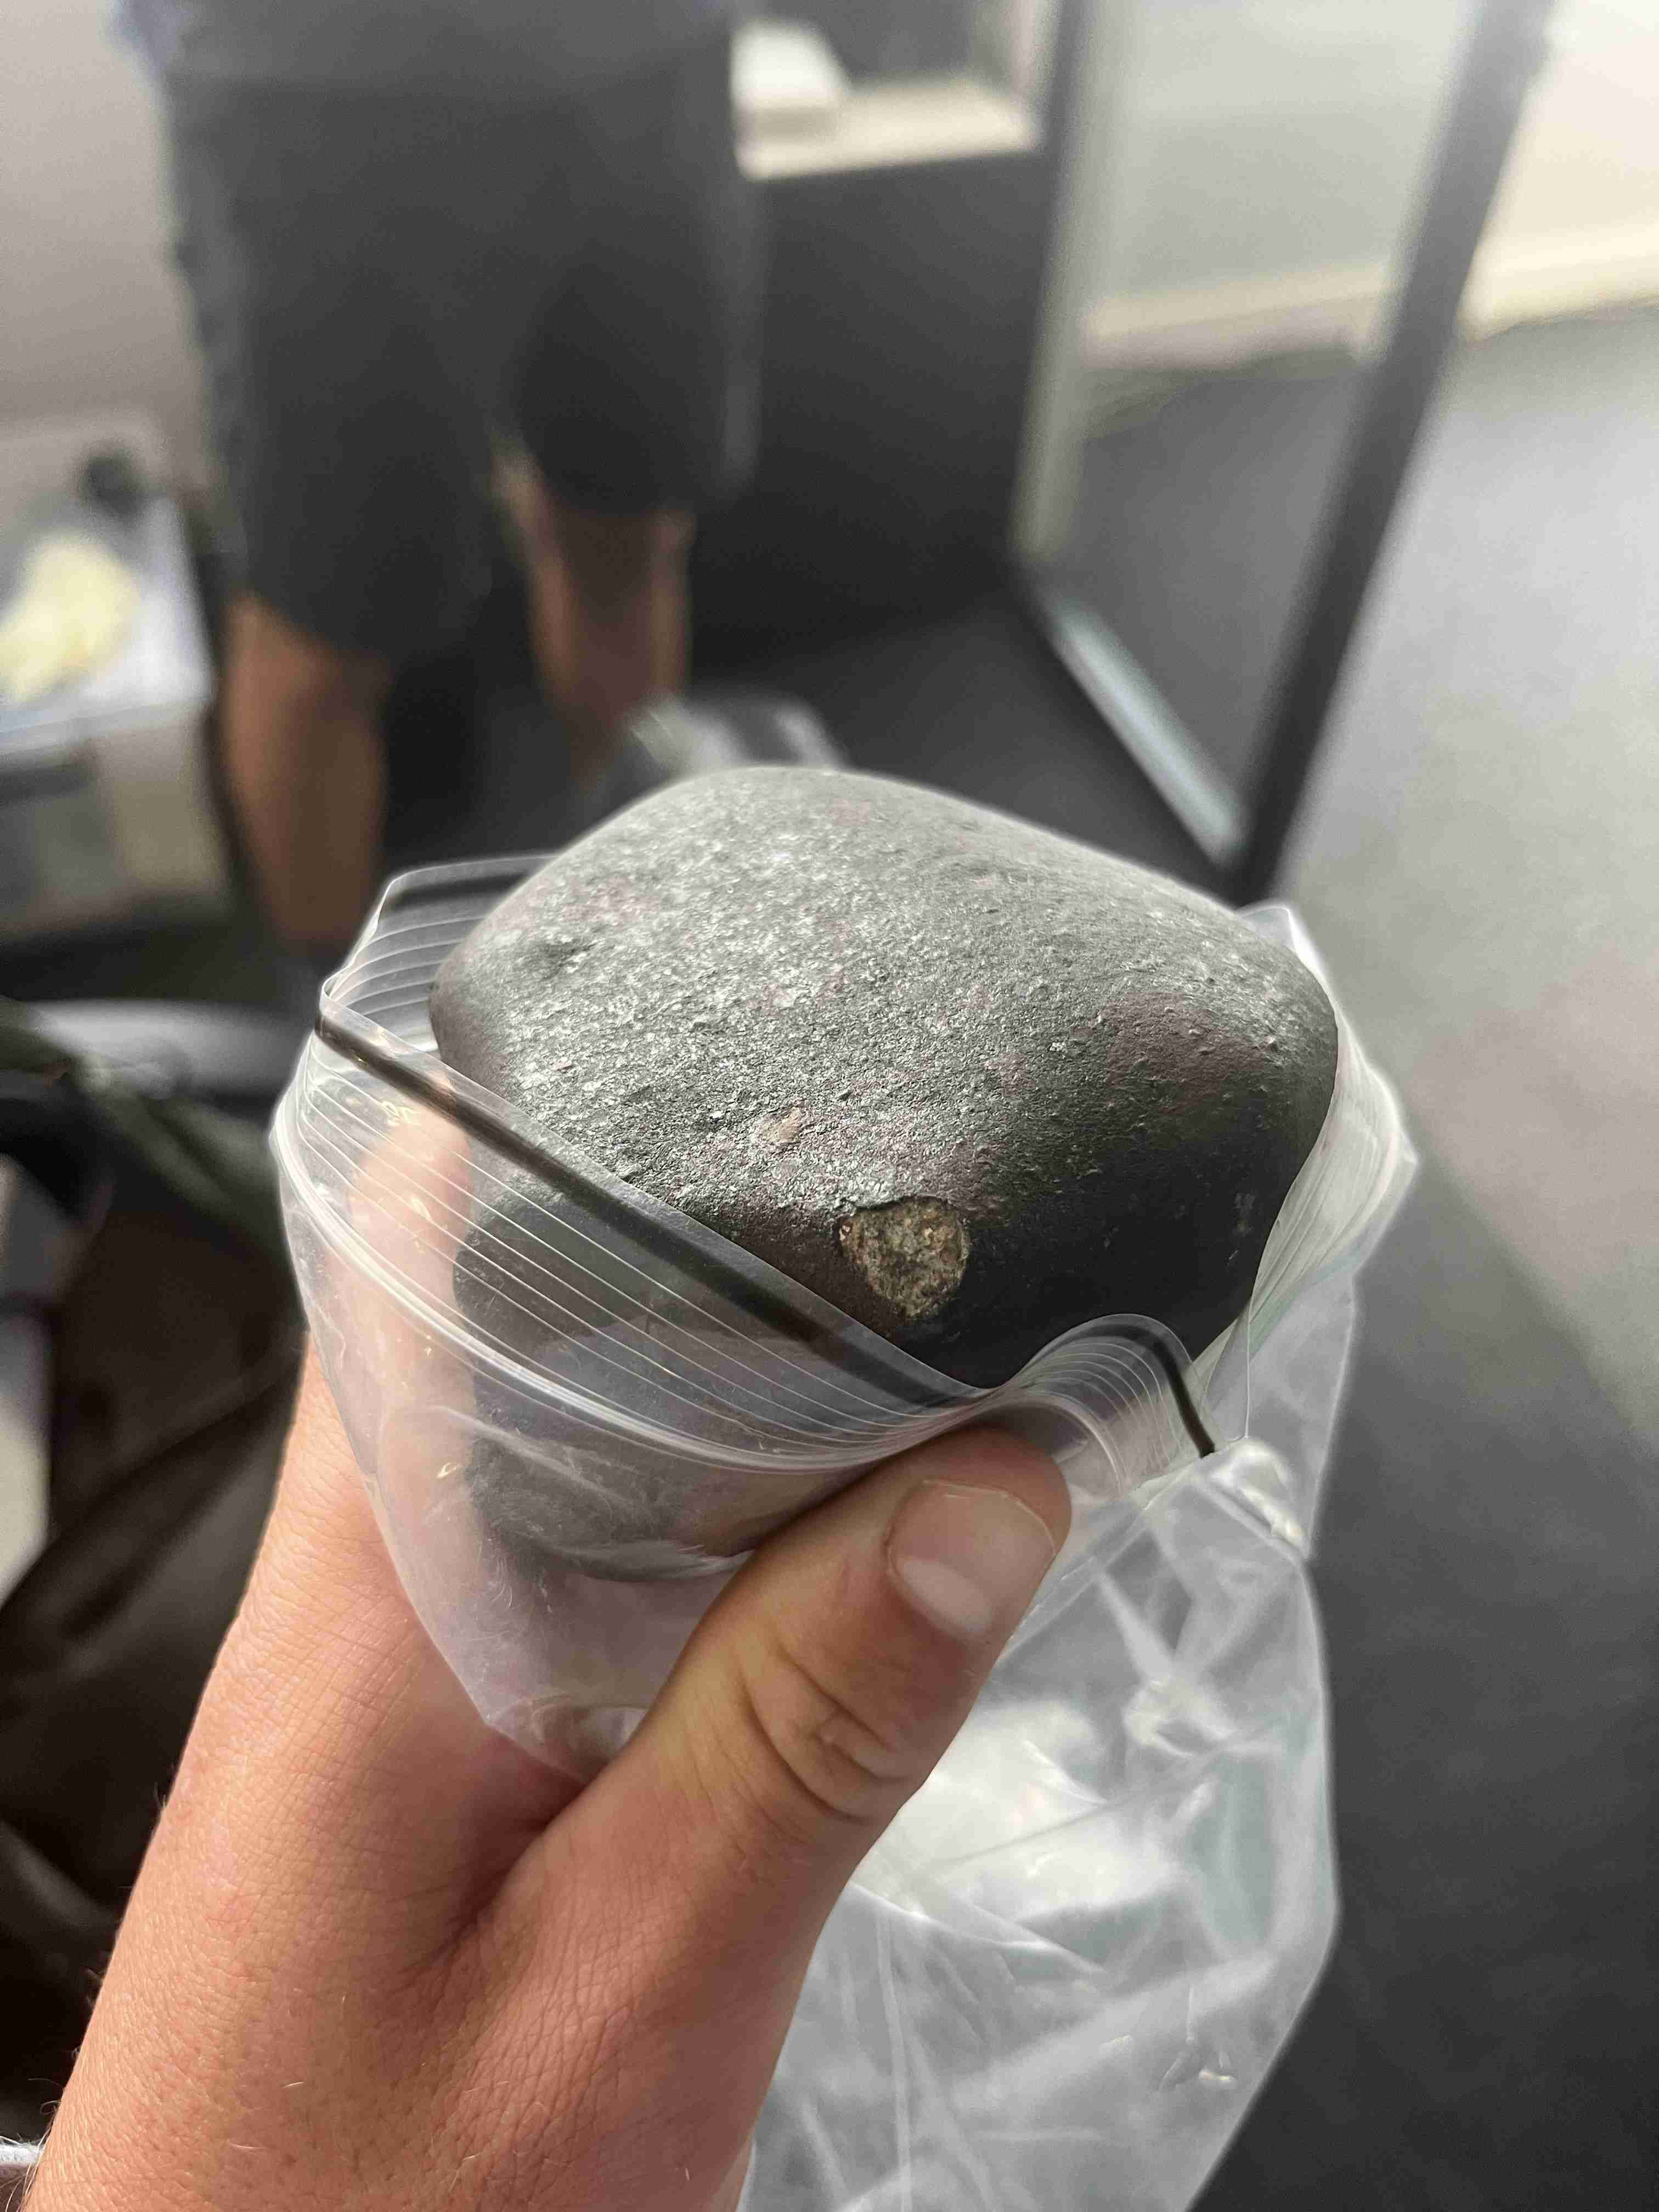 Meteorite found yesterday in New Zealand.